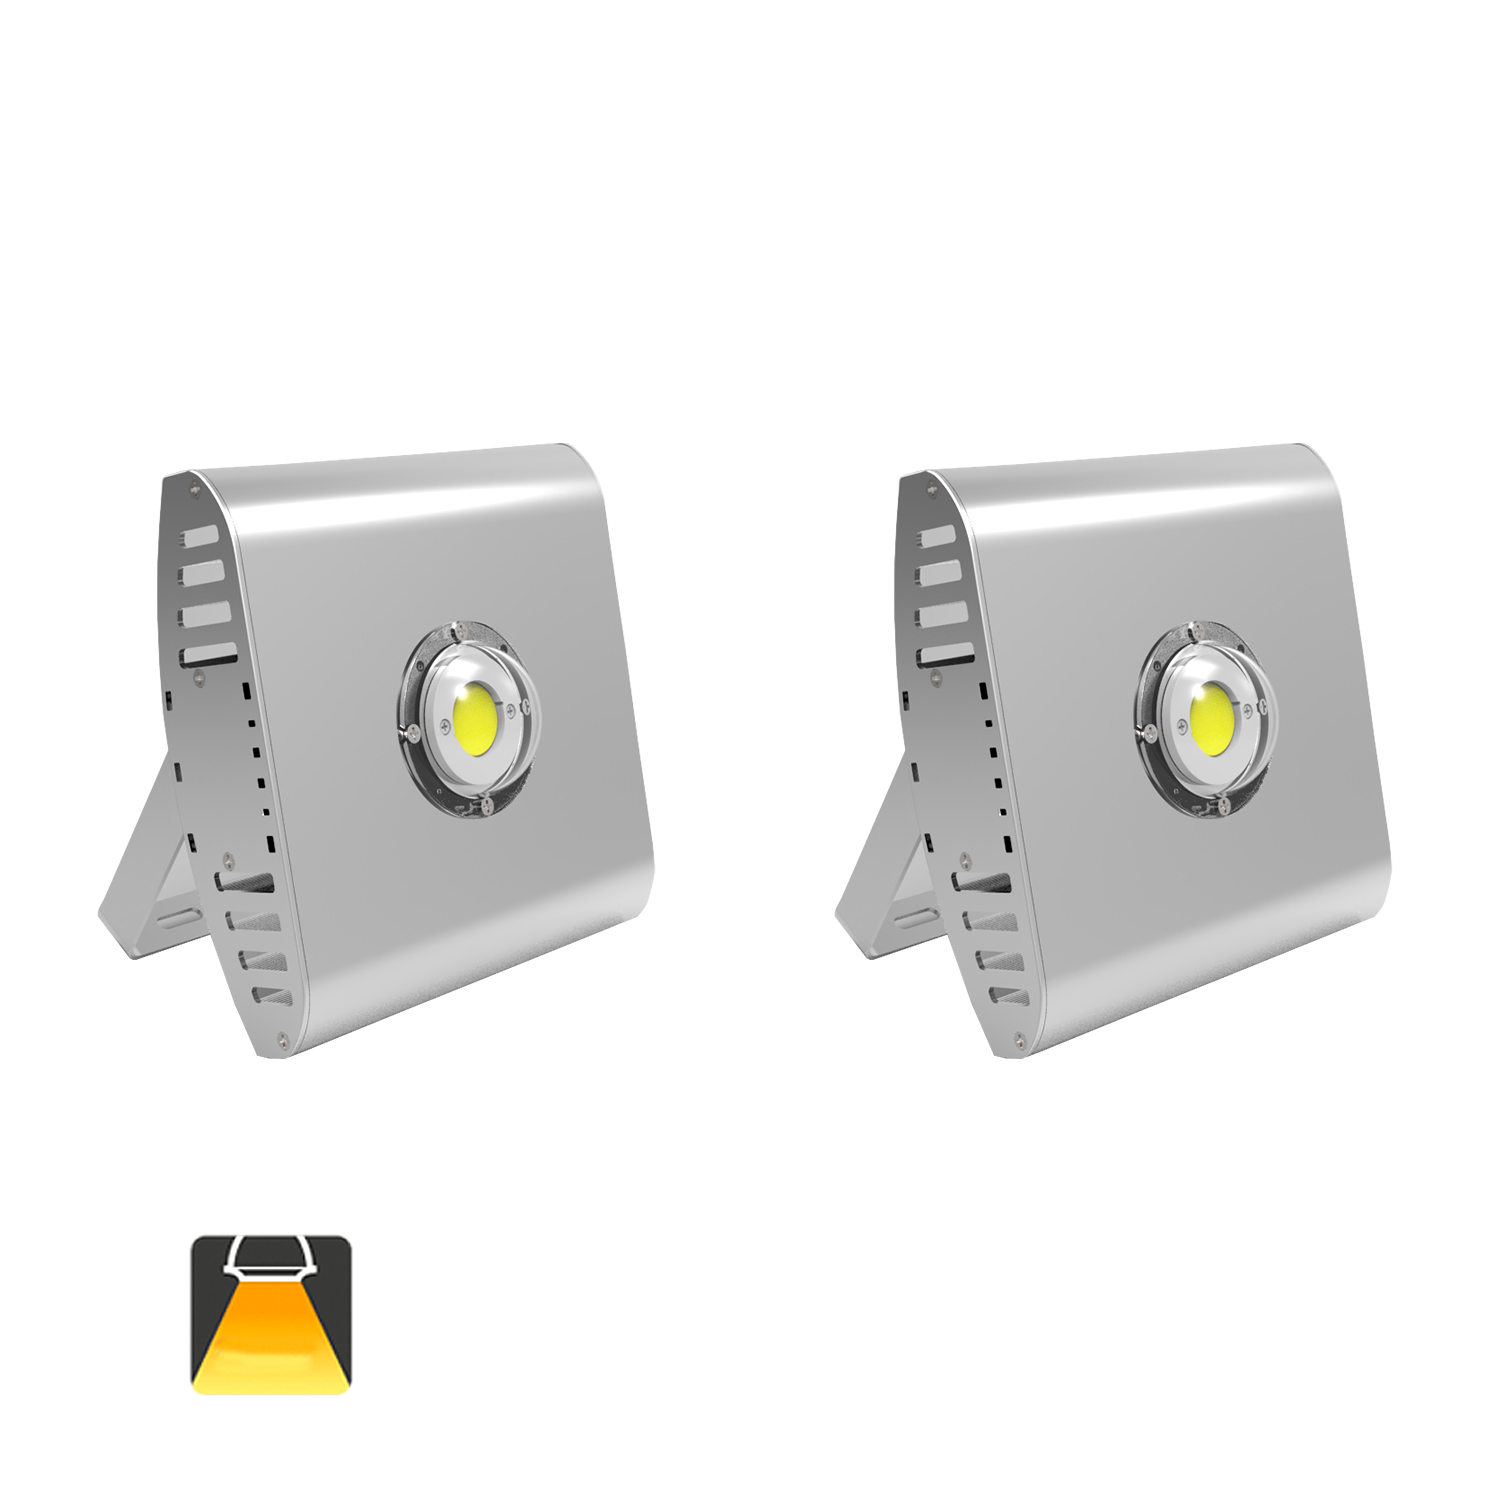 Aigostar - Confezione da 2 Faretto a LED COB, 50W, 4500LM, Impermeabile IP65, Luce Naturale 4000K[Classe di efficienza energetica A+]